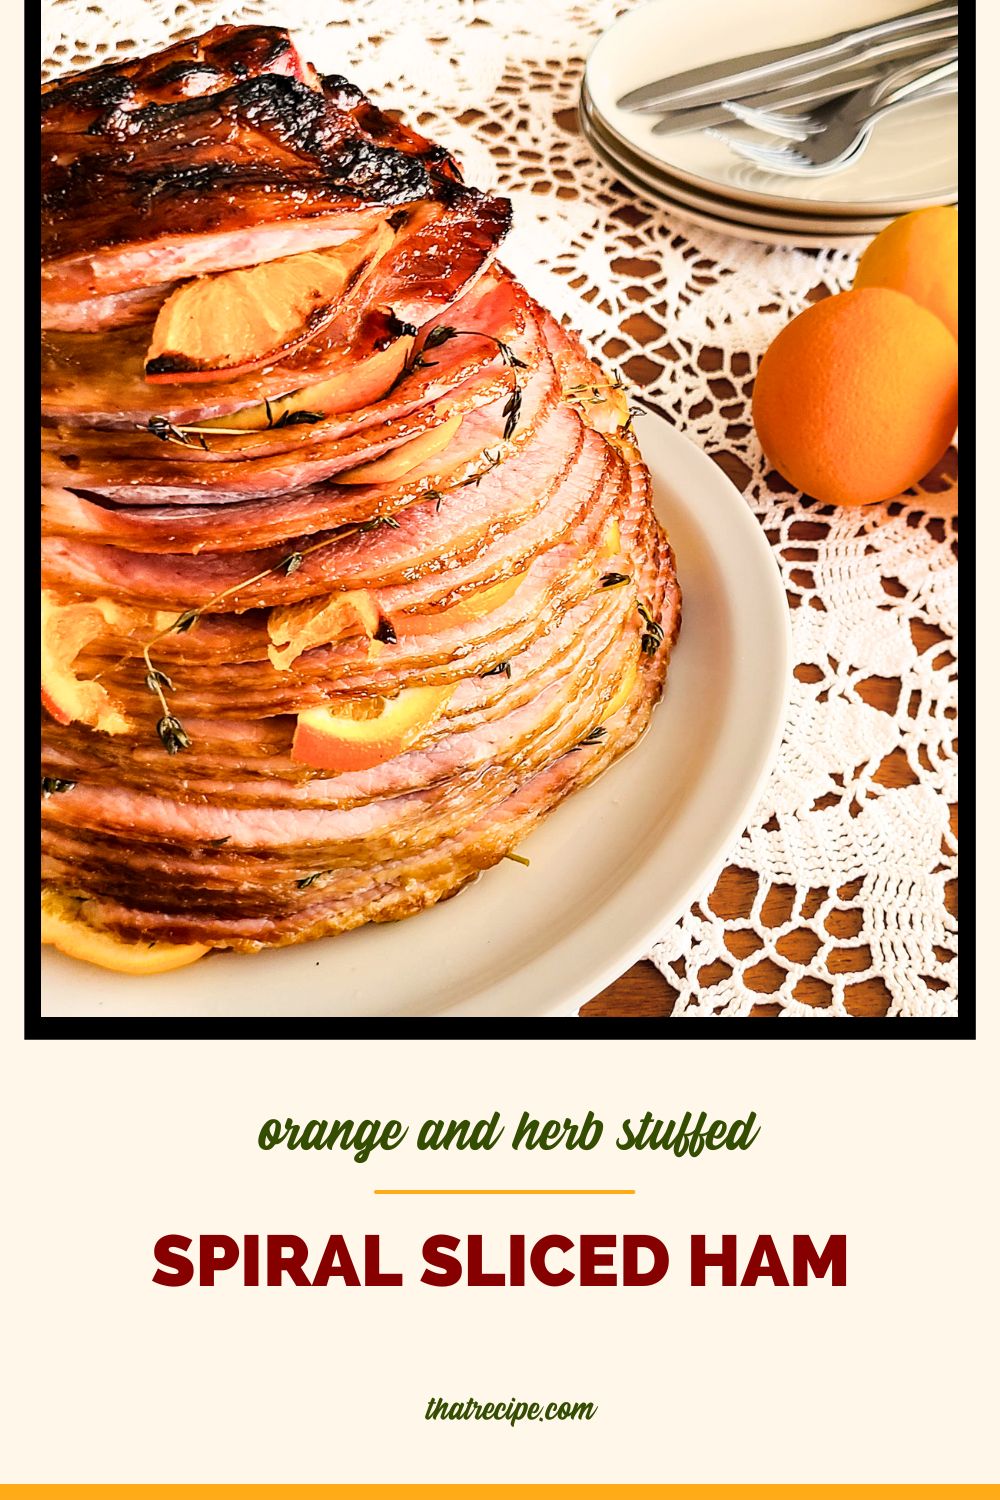 Spiral sliced ham on a plate with text overlay "orange stuffed spiral sliced ham"